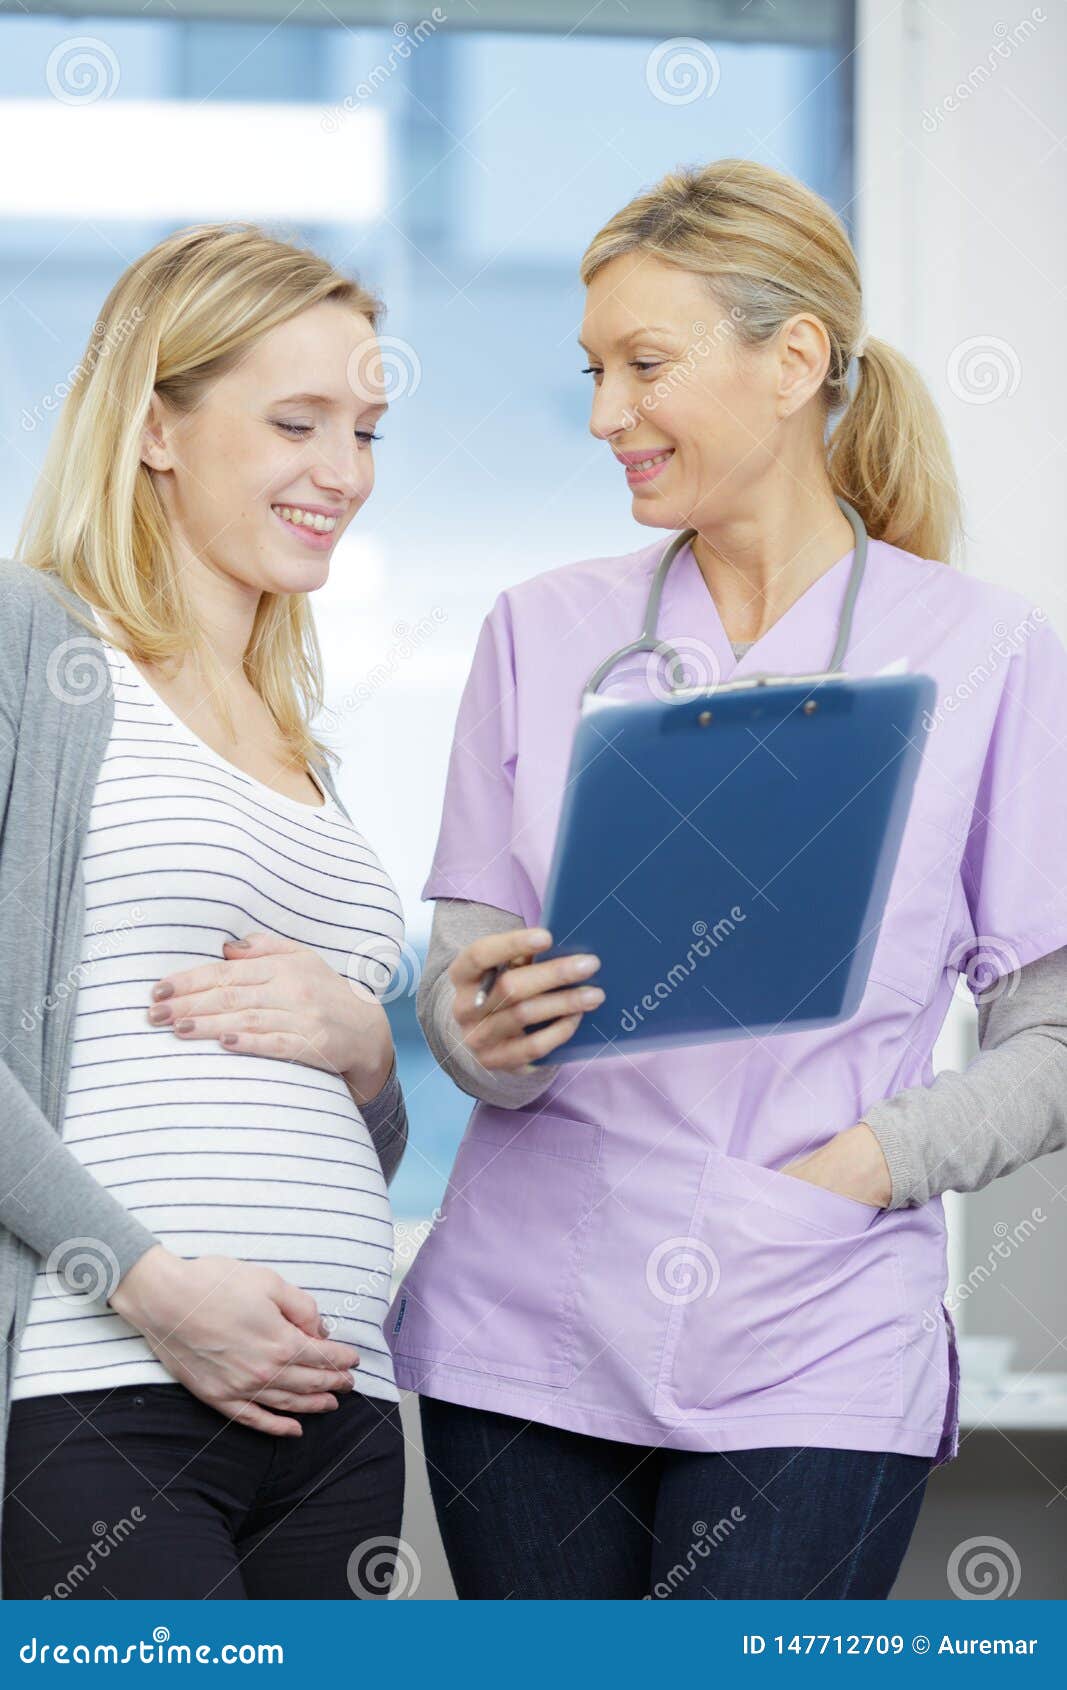 40 weeks pregnant doctor visit